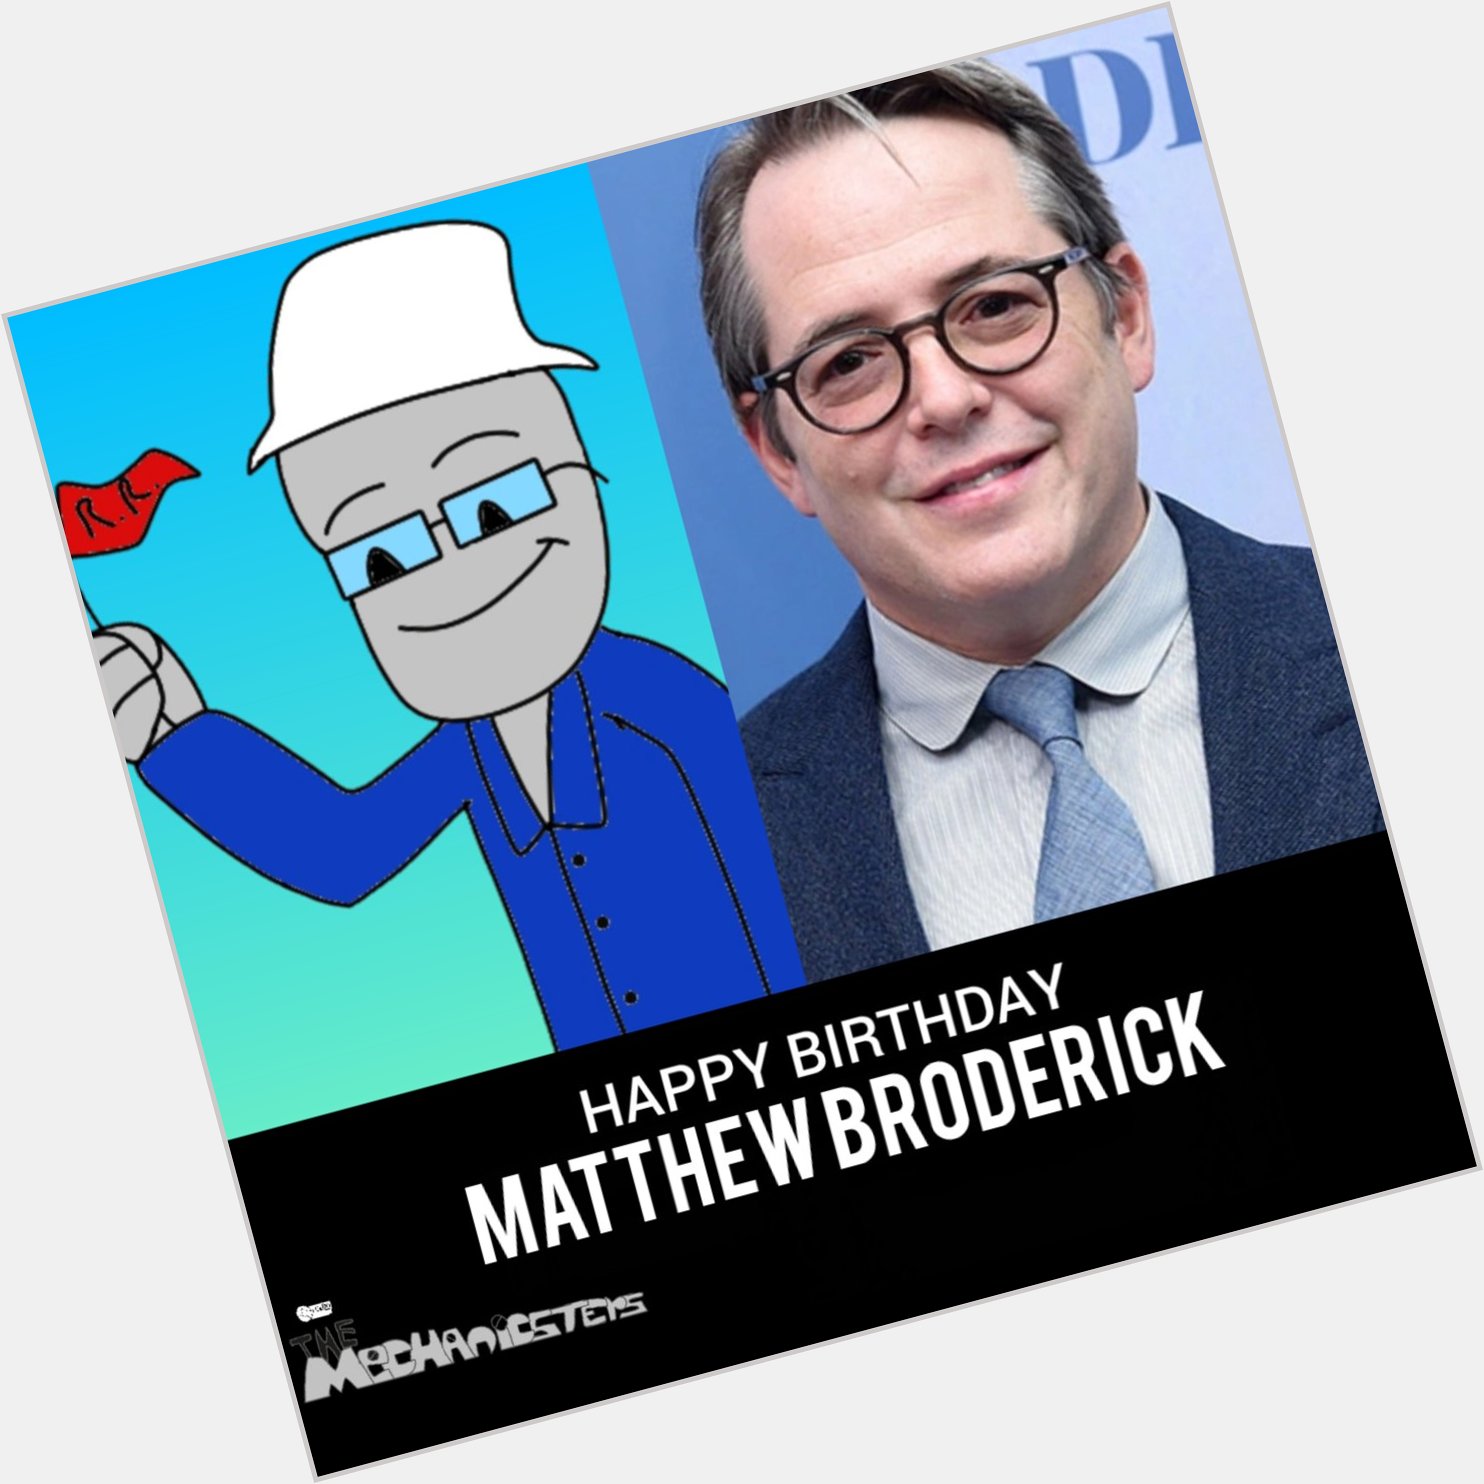 The Mechanicsters wish to say Happy Birthday to Matthew Broderick .  